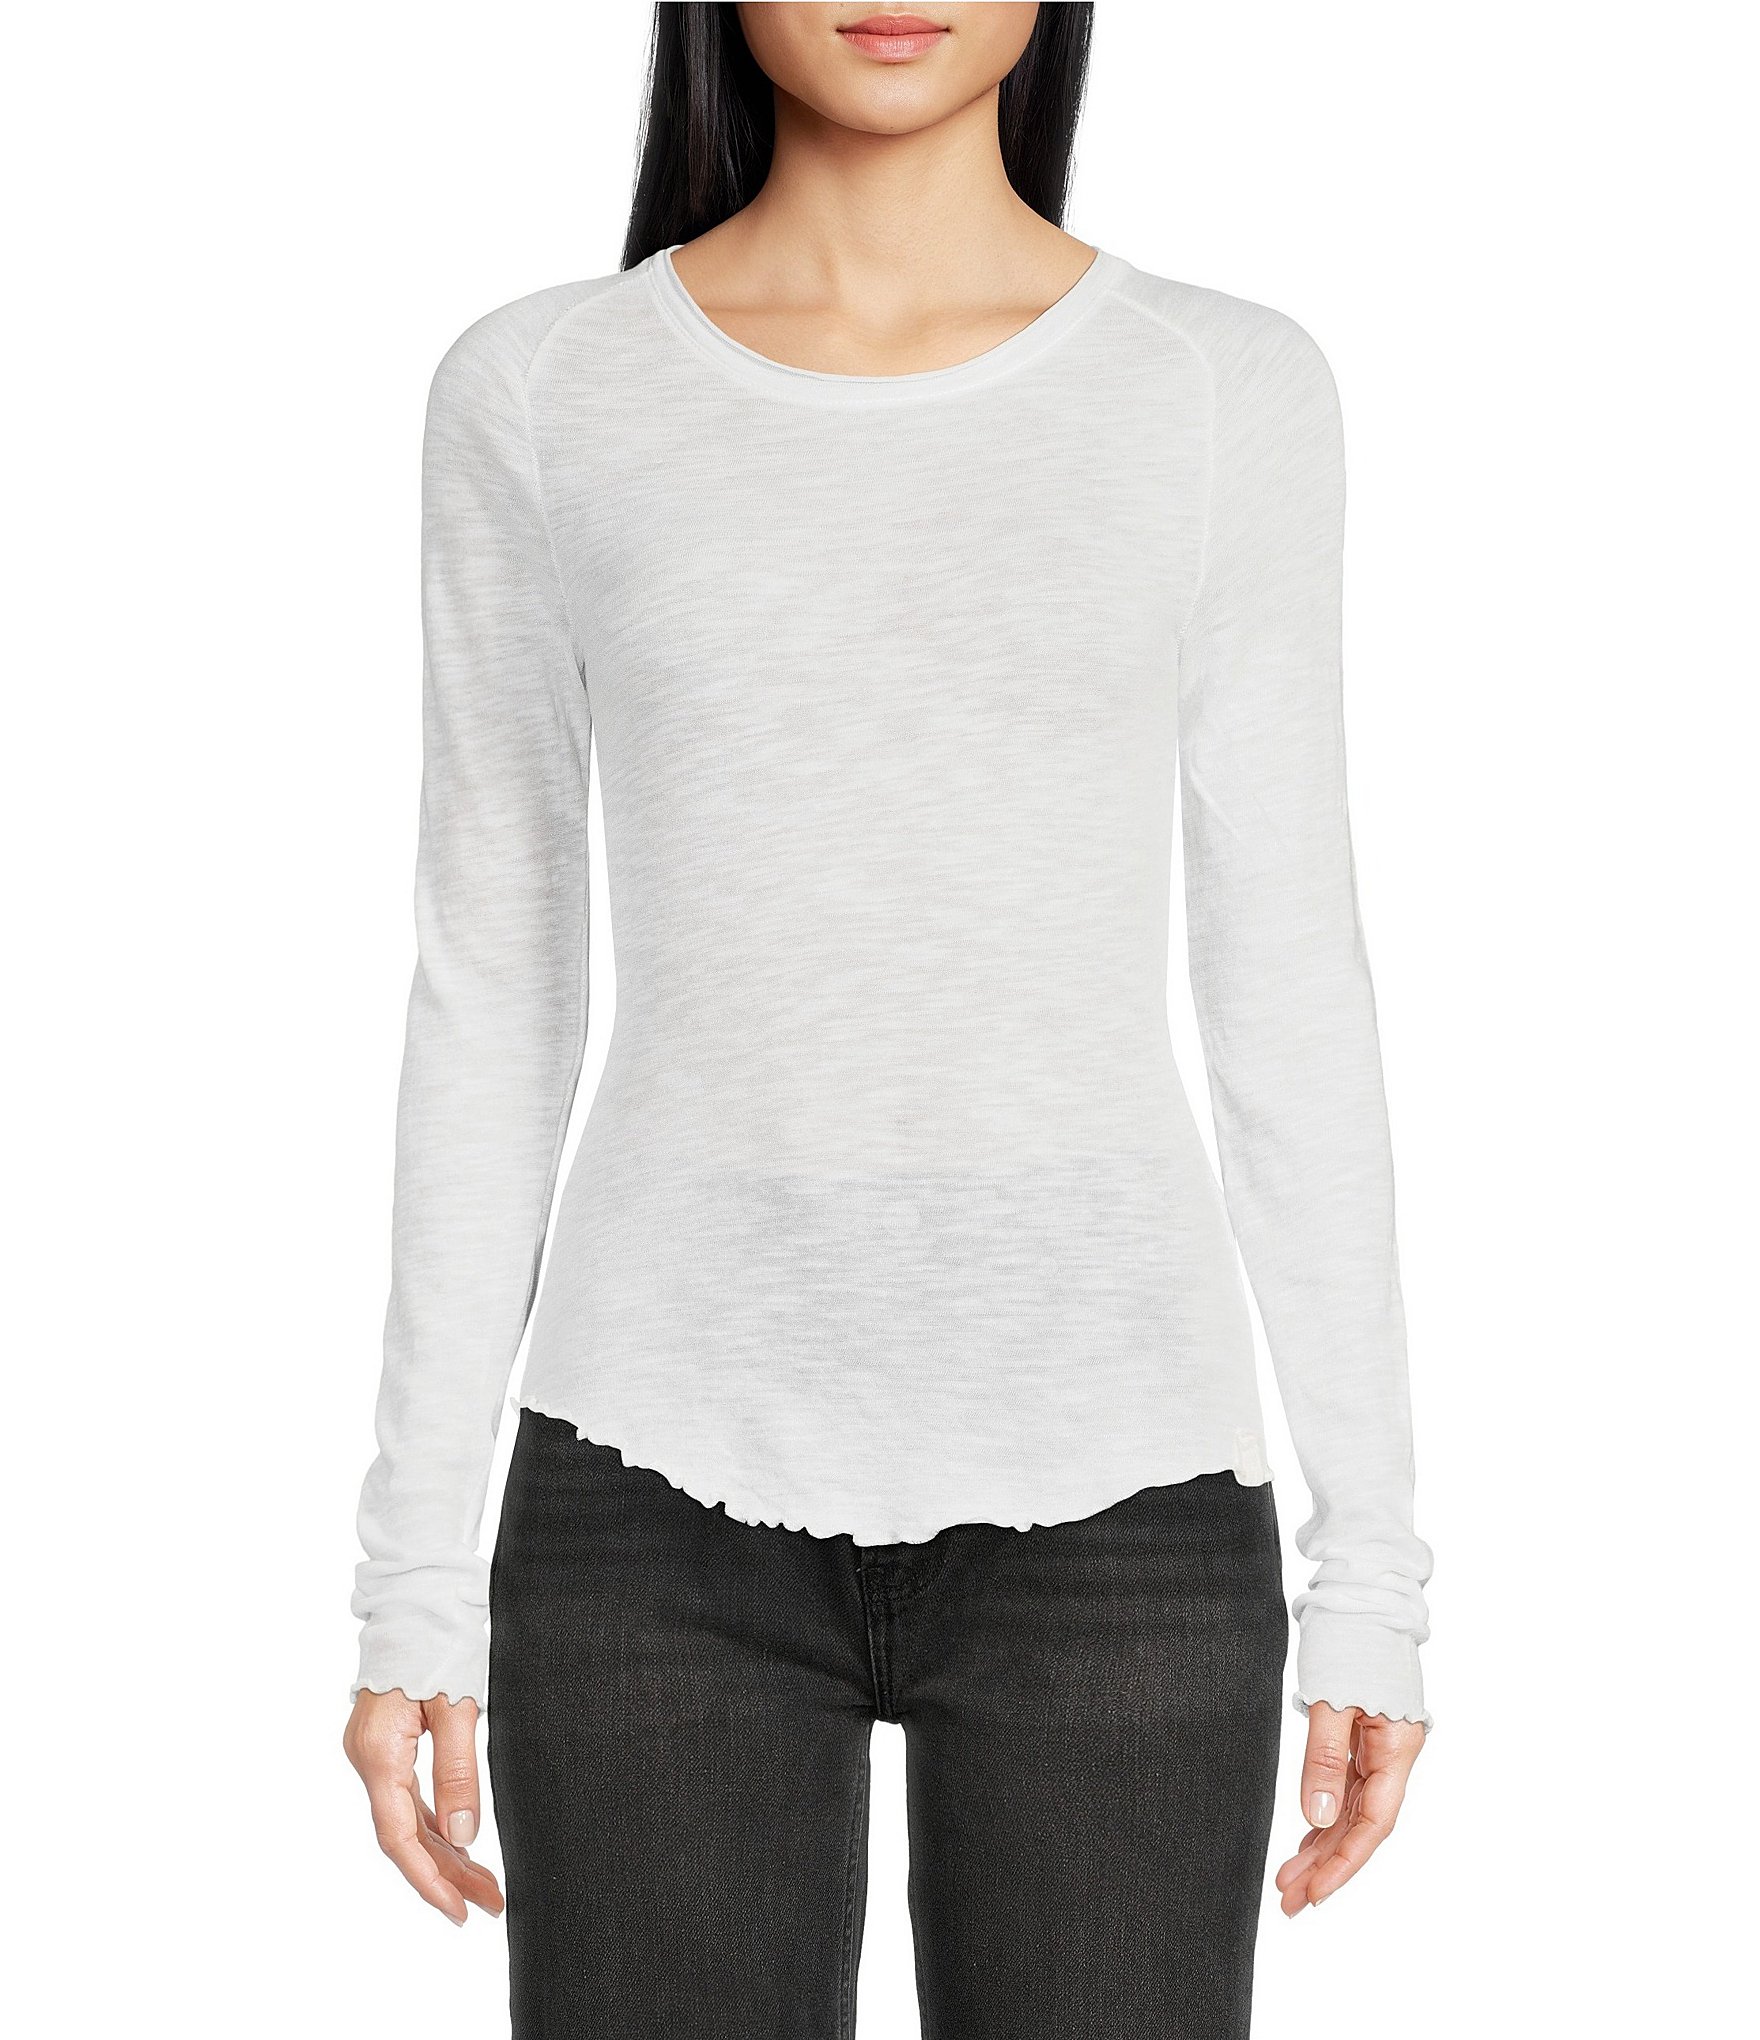 Buy Plain White Women Full Sleeves T-shirt Online - BeYOUng